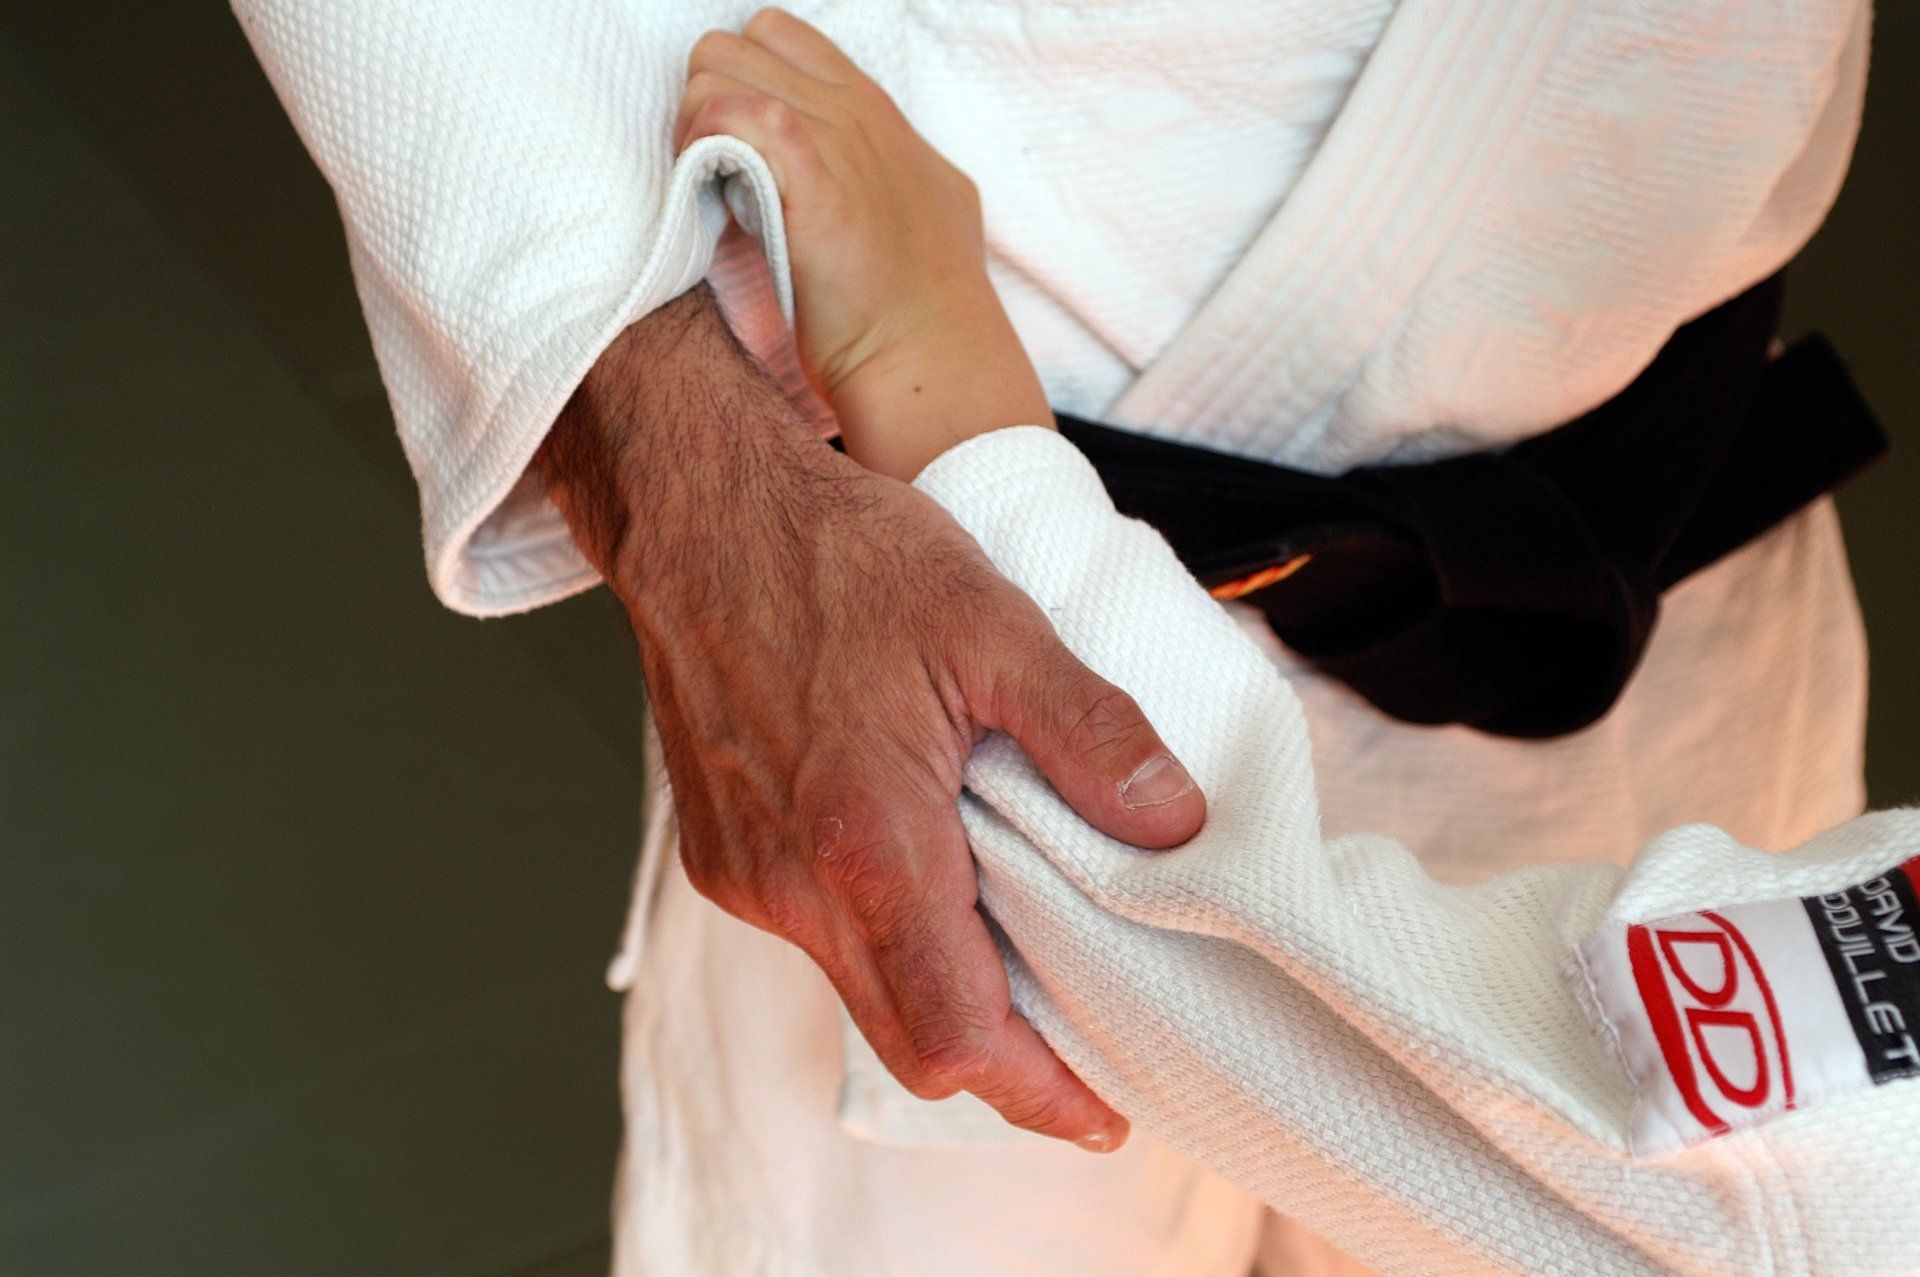 association sportive du mesnil le roi, asmr judo